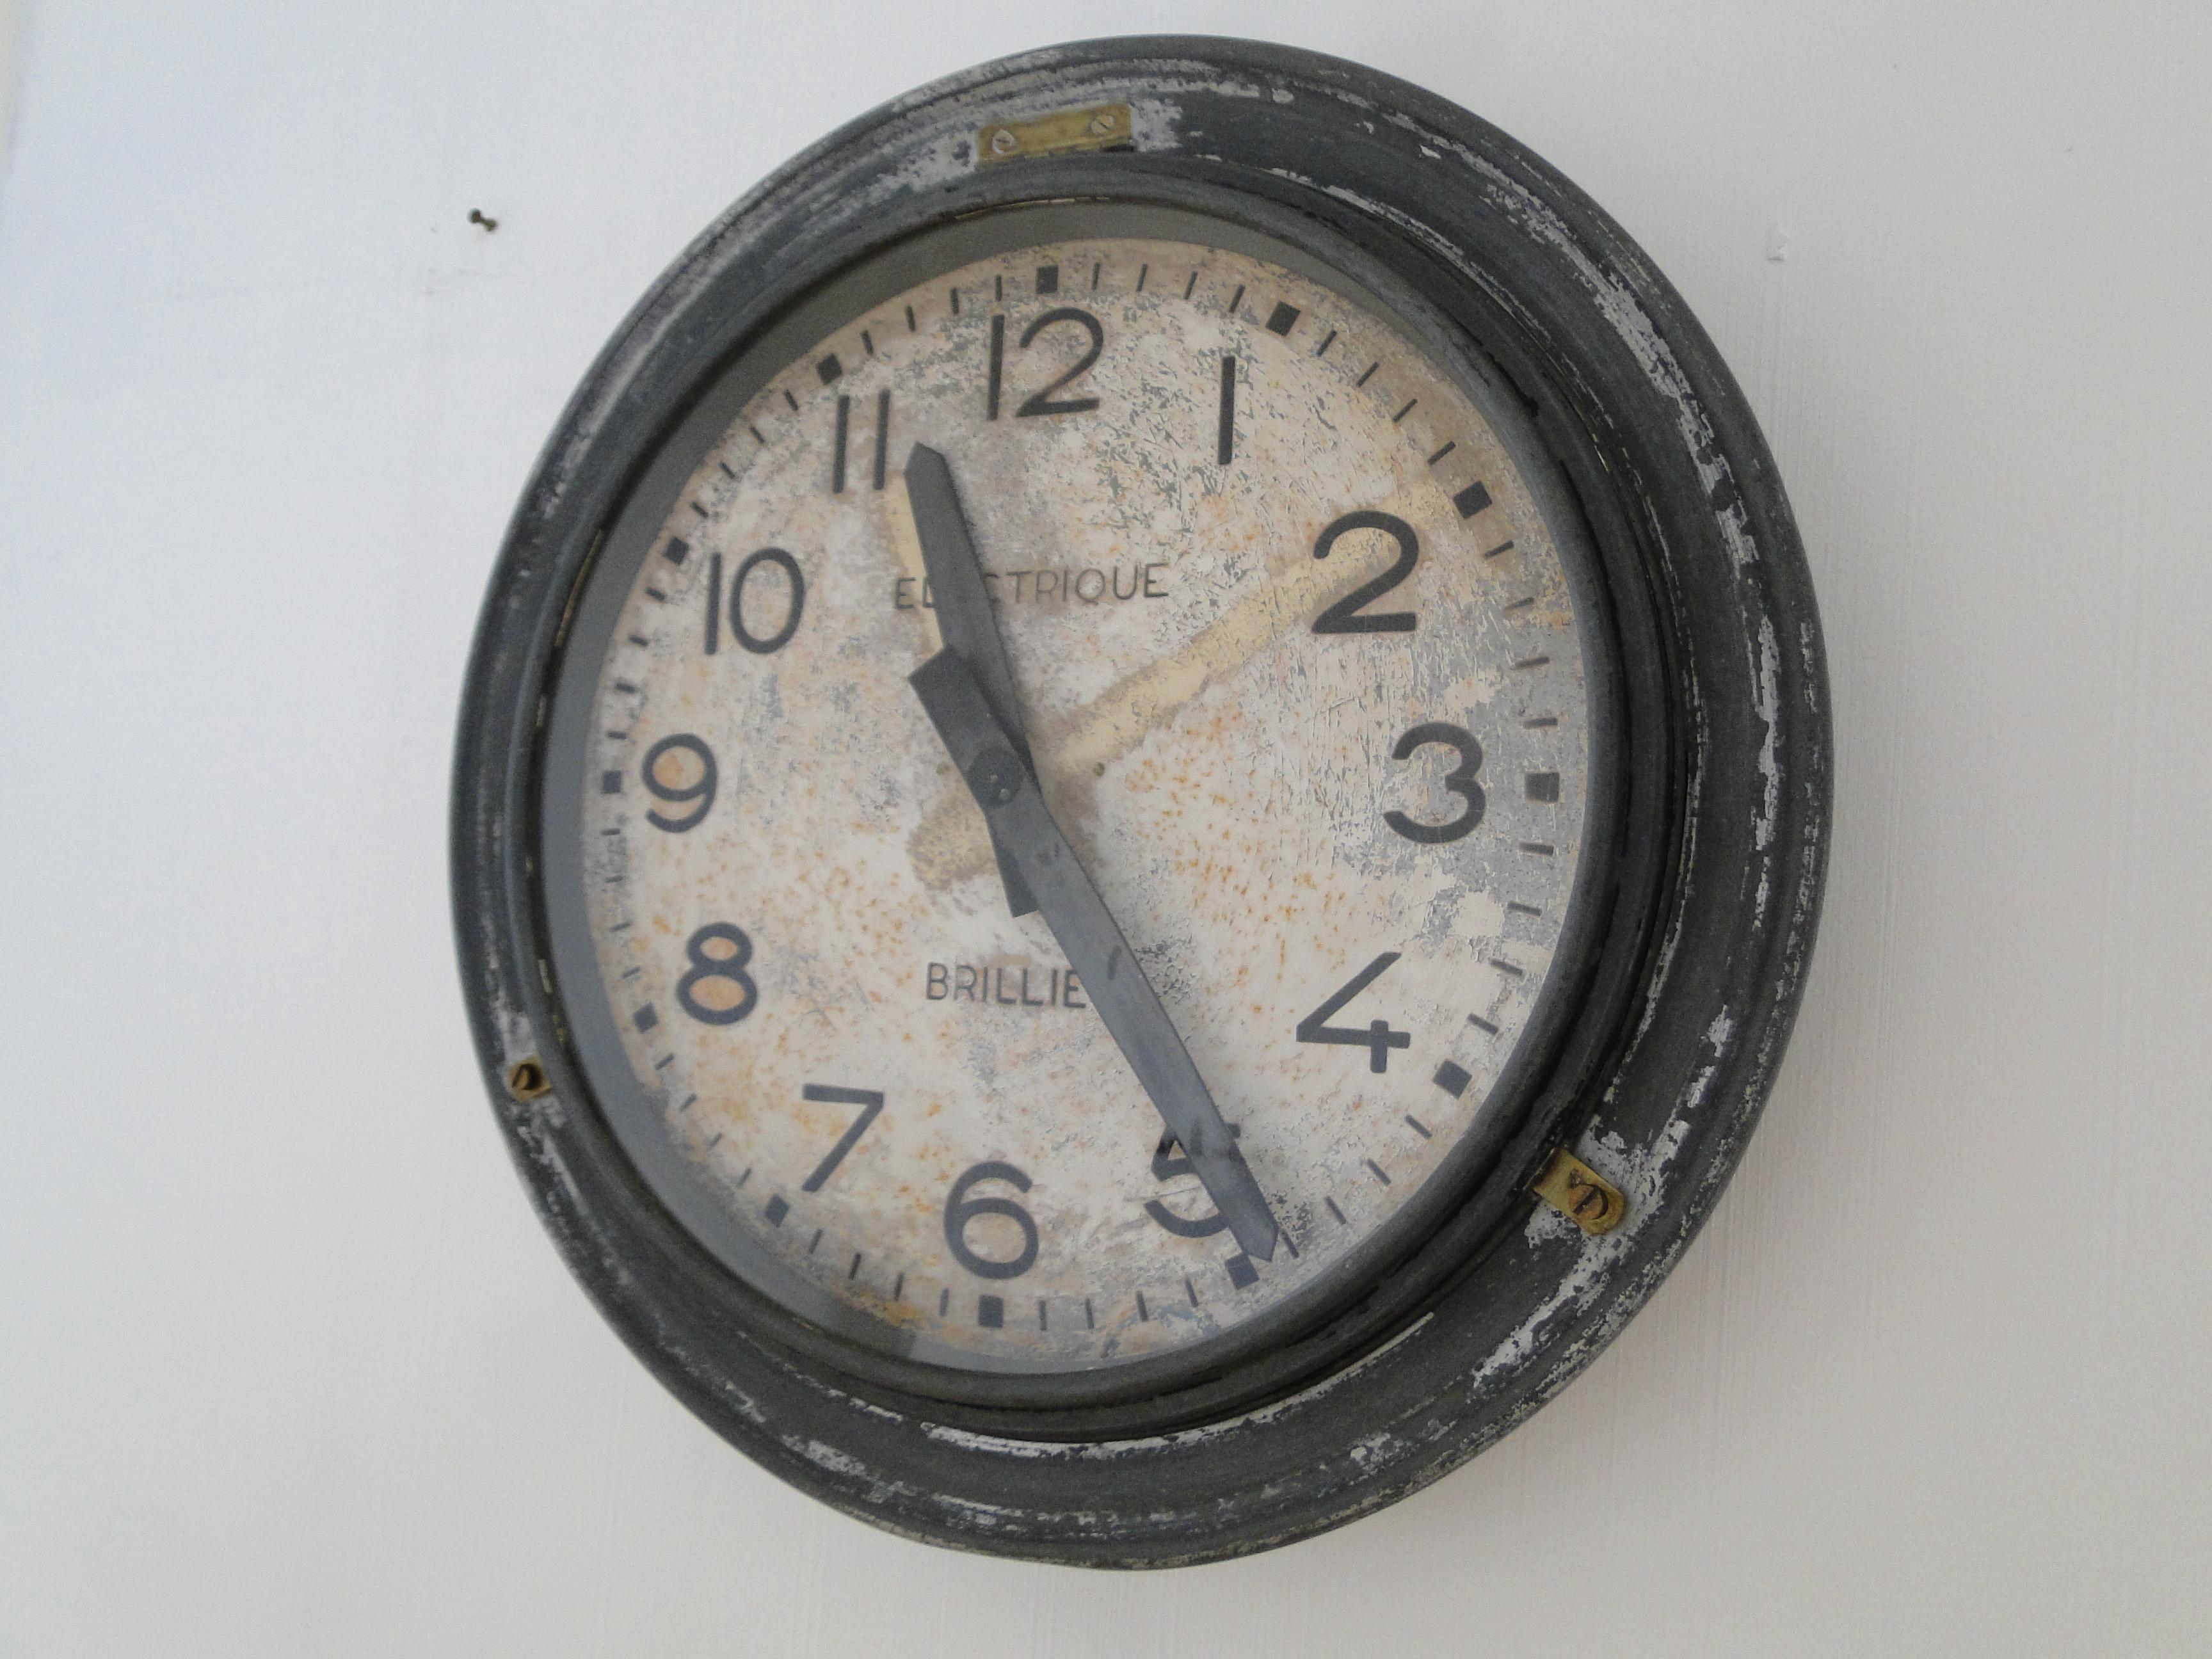 Brillie Vintage French Station Railway Clock Factory Industrial Paris France 5